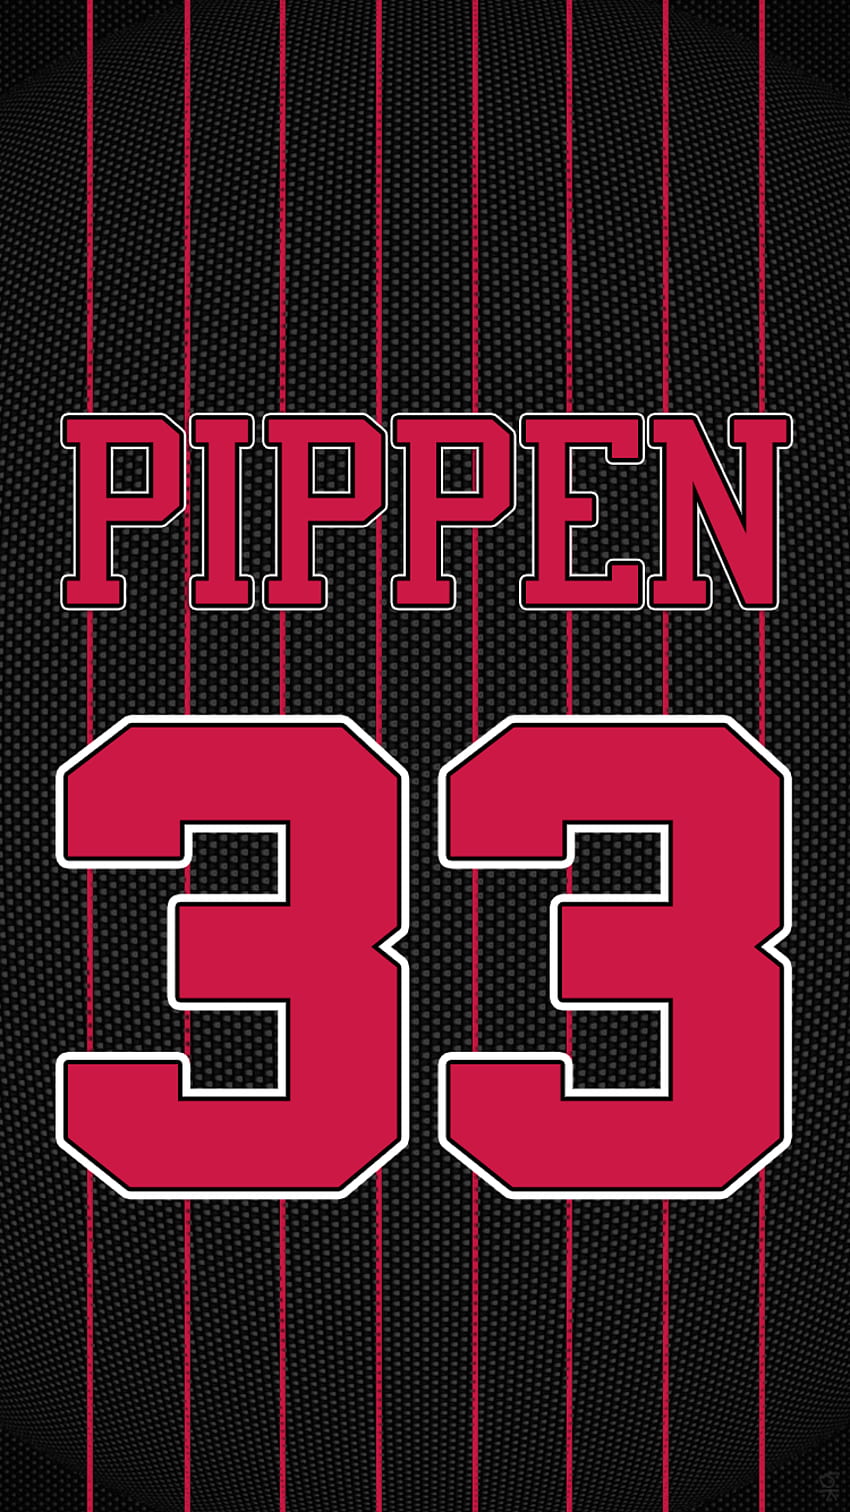 Chicago Bulls Pippen Png.613147 750×1,334 Píxeles. toros de chicago, scottie pippen fondo de pantalla del teléfono